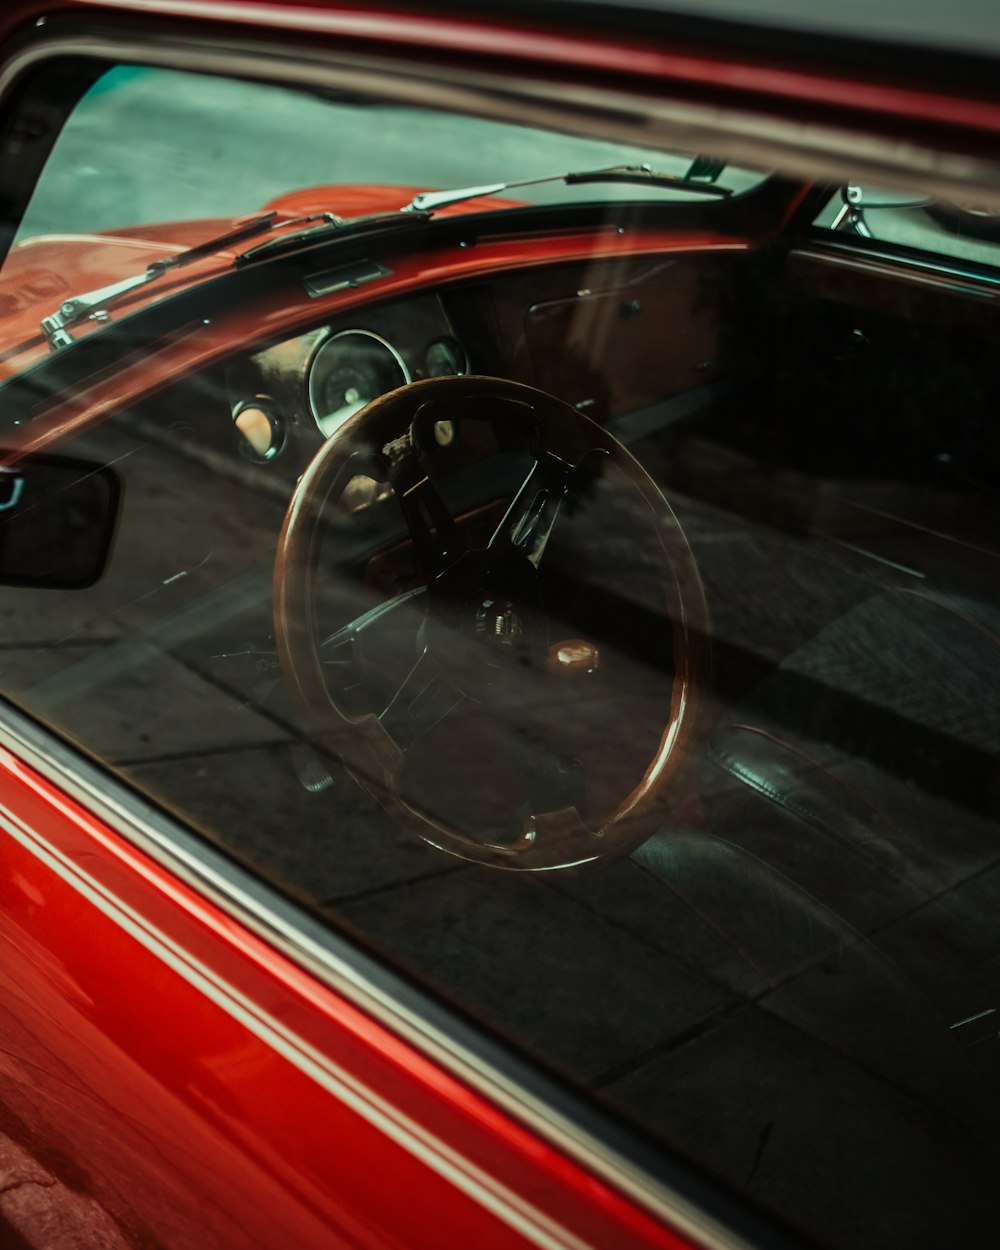 red car with black steering wheel